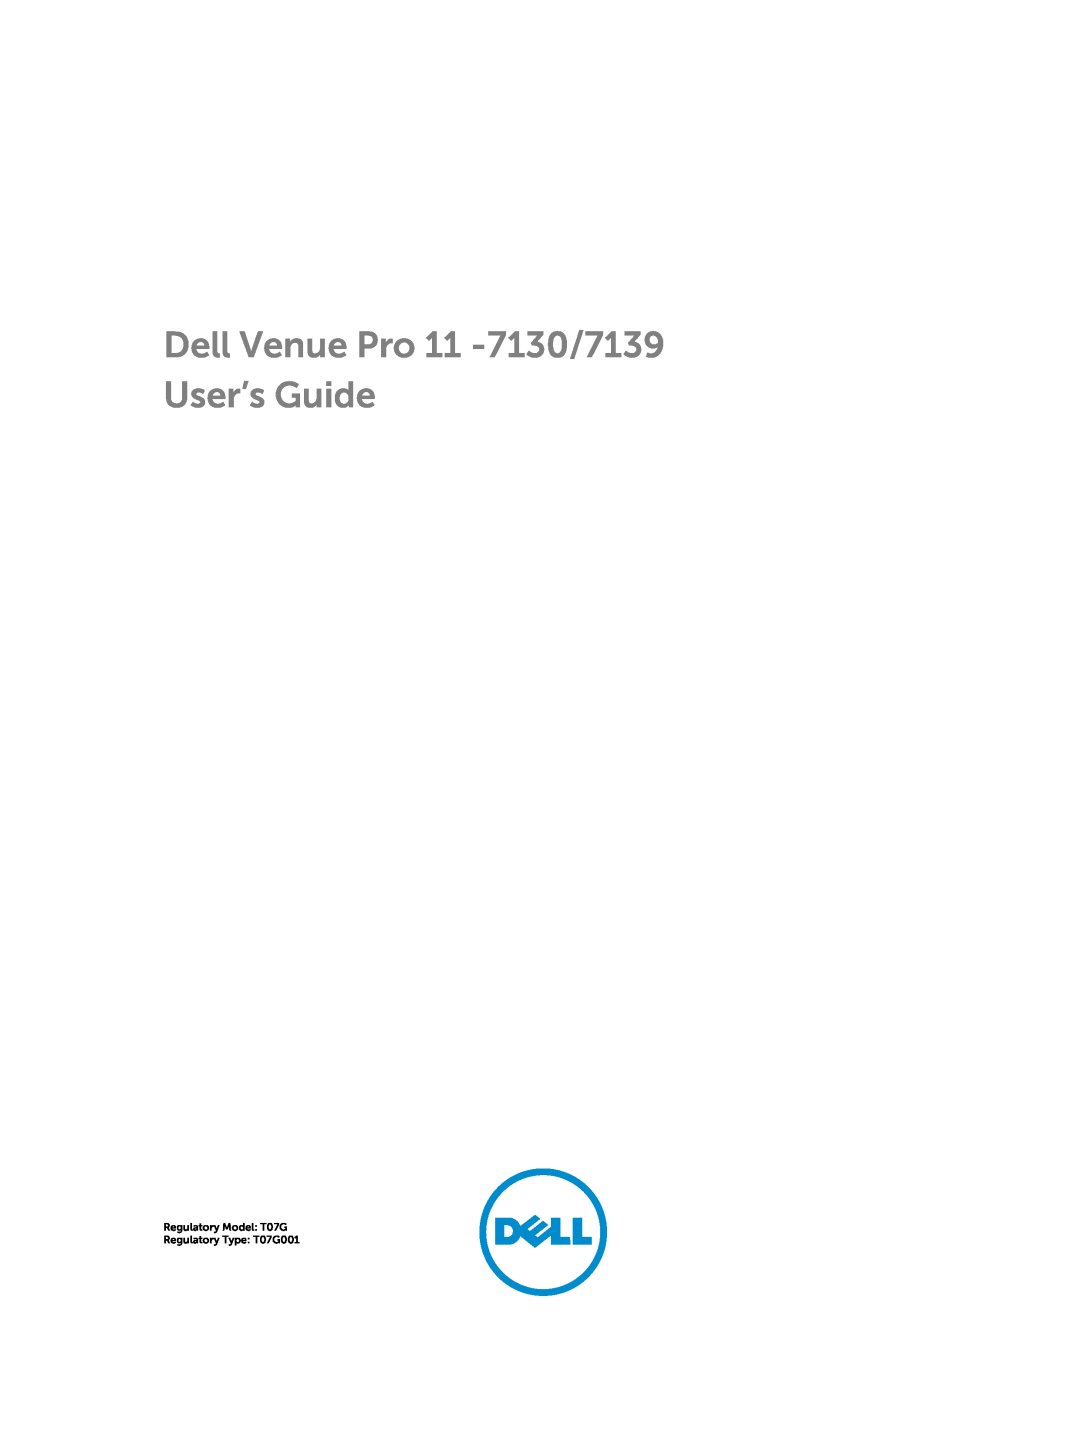 Dell PRO11I6363BLK manual Dell Venue Pro 11 -7130/7139 User’s Guide, Regulatory Model T07G Regulatory Type T07G001 